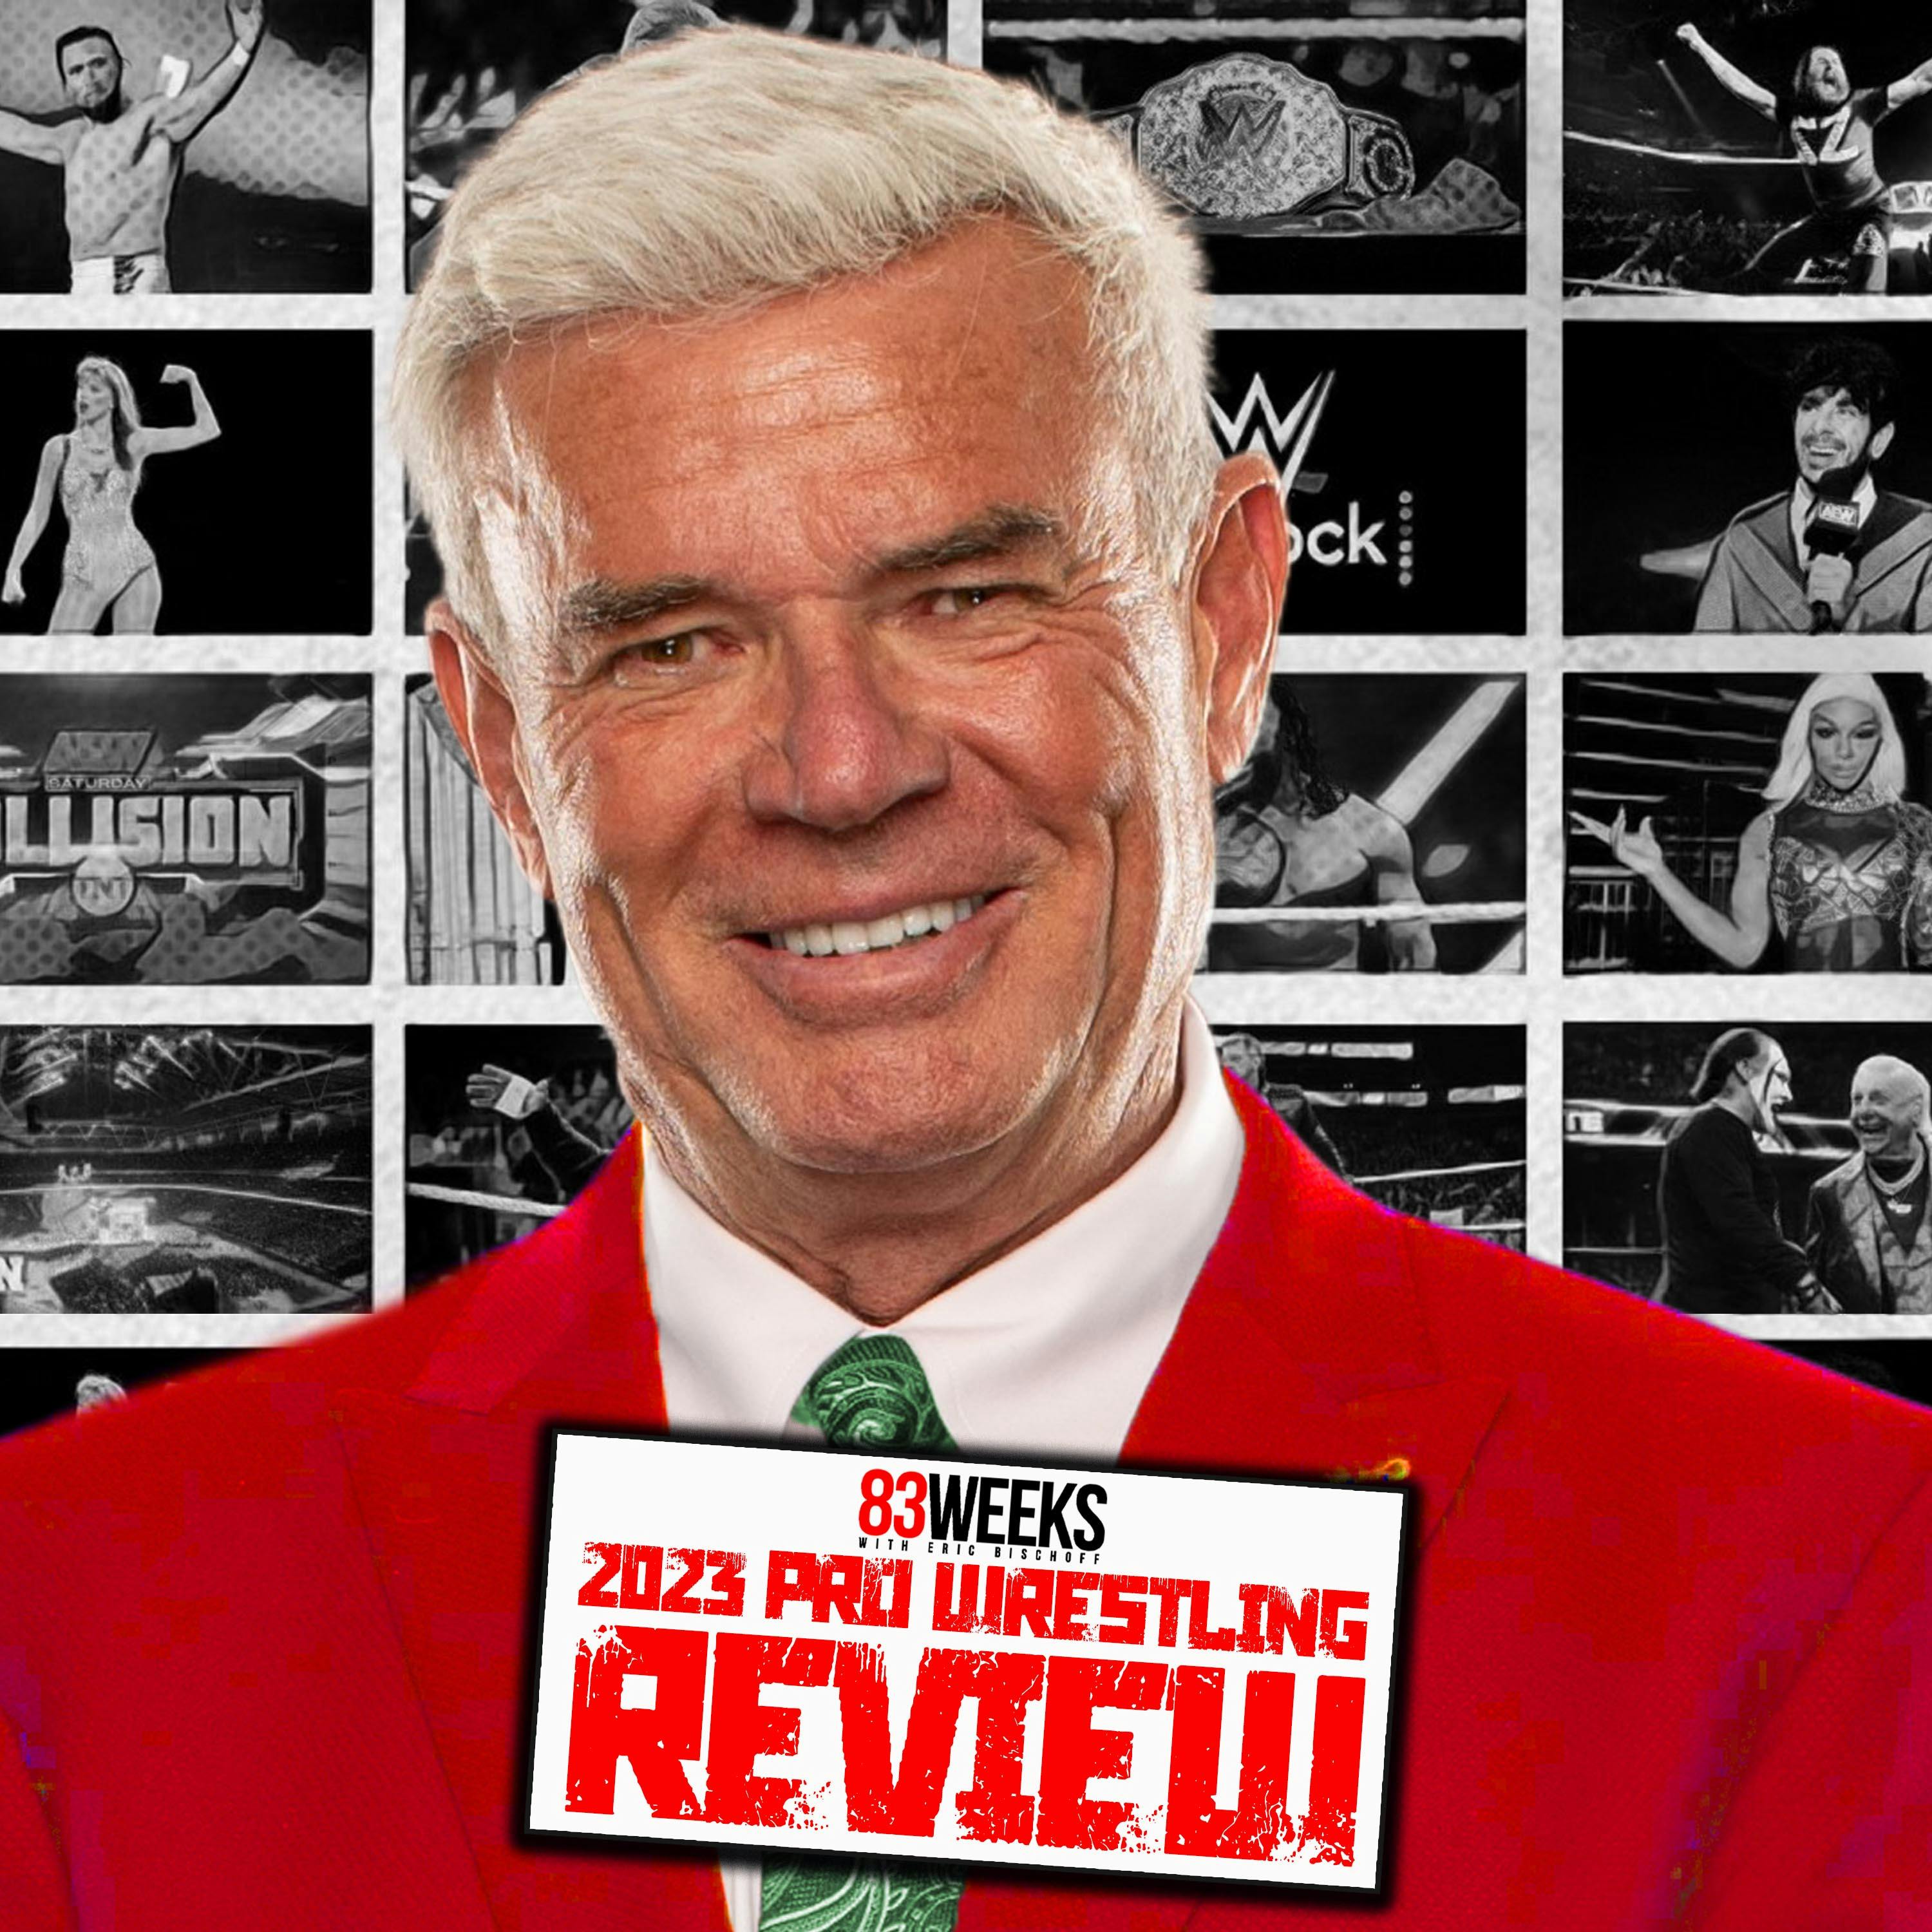 Episode 302: 2023 Pro Wrestling Review